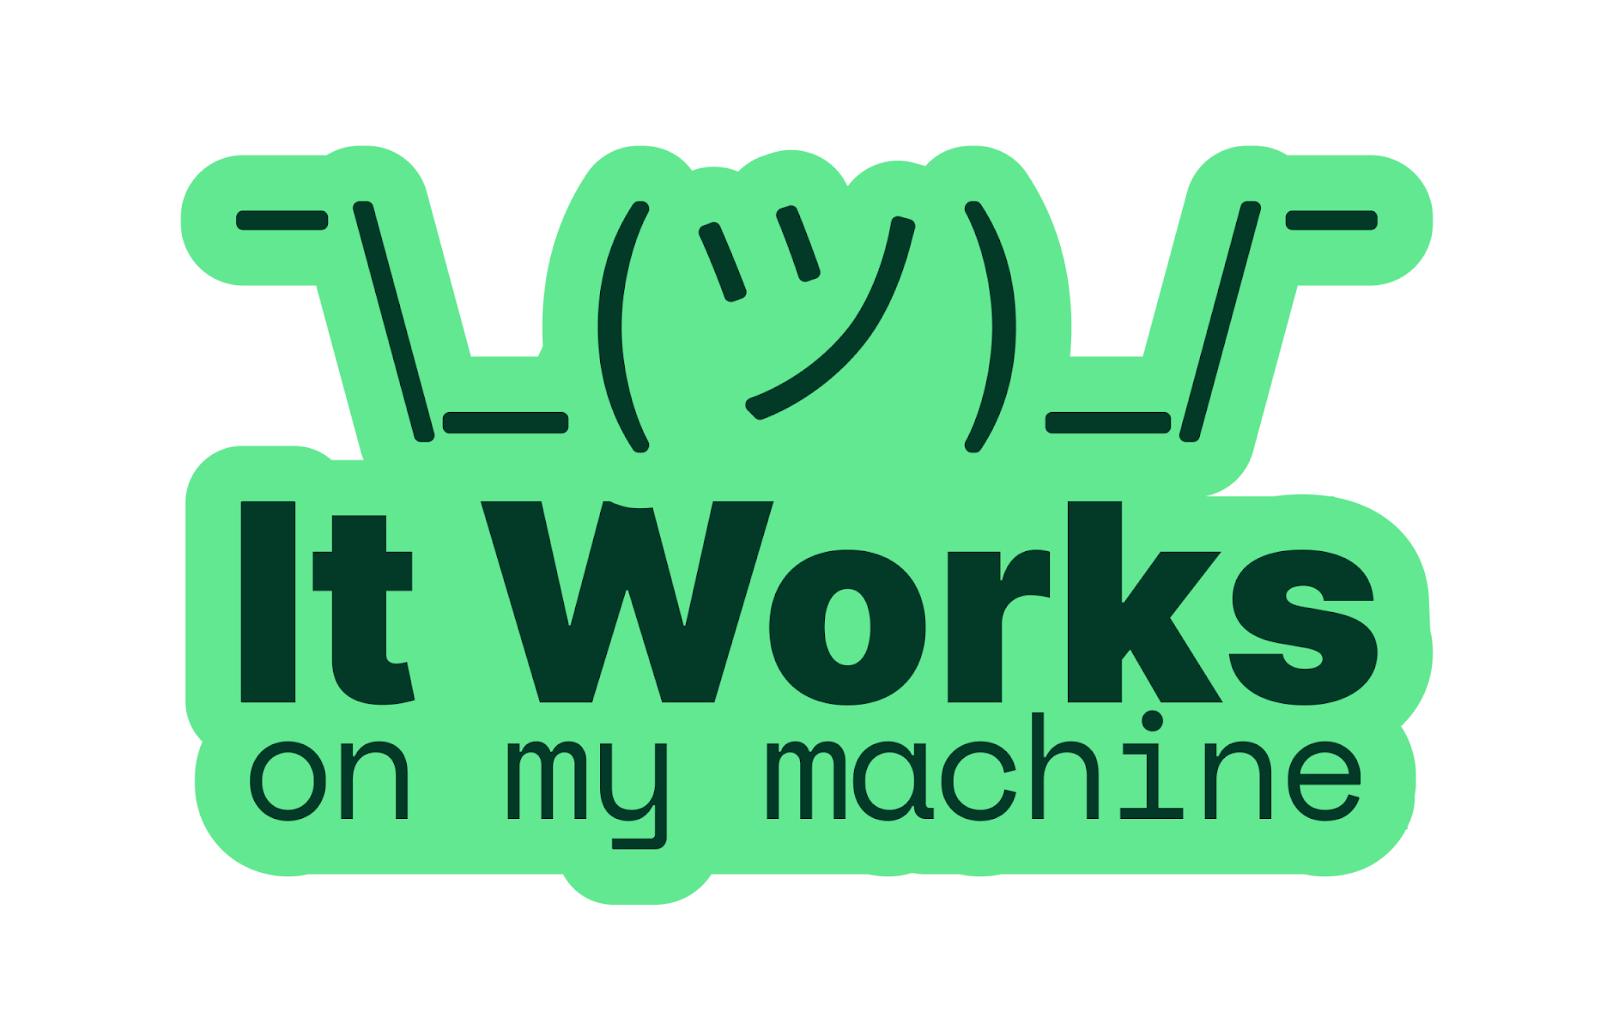 It works on my machine